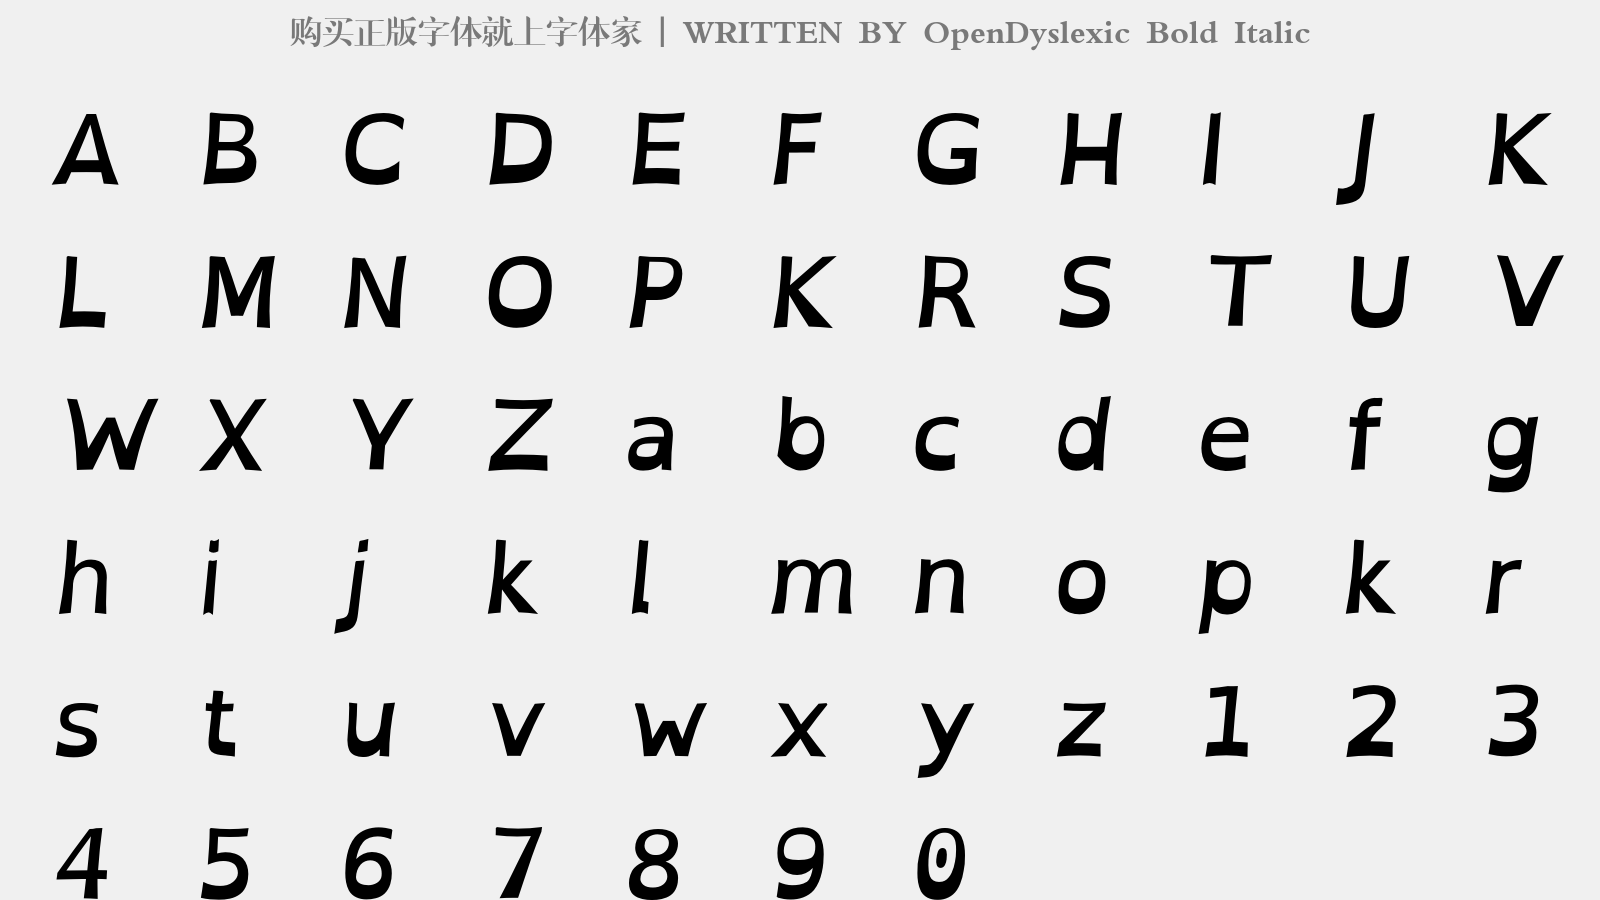 OpenDyslexic Bold Italic - 大写字母/小写字母/数字